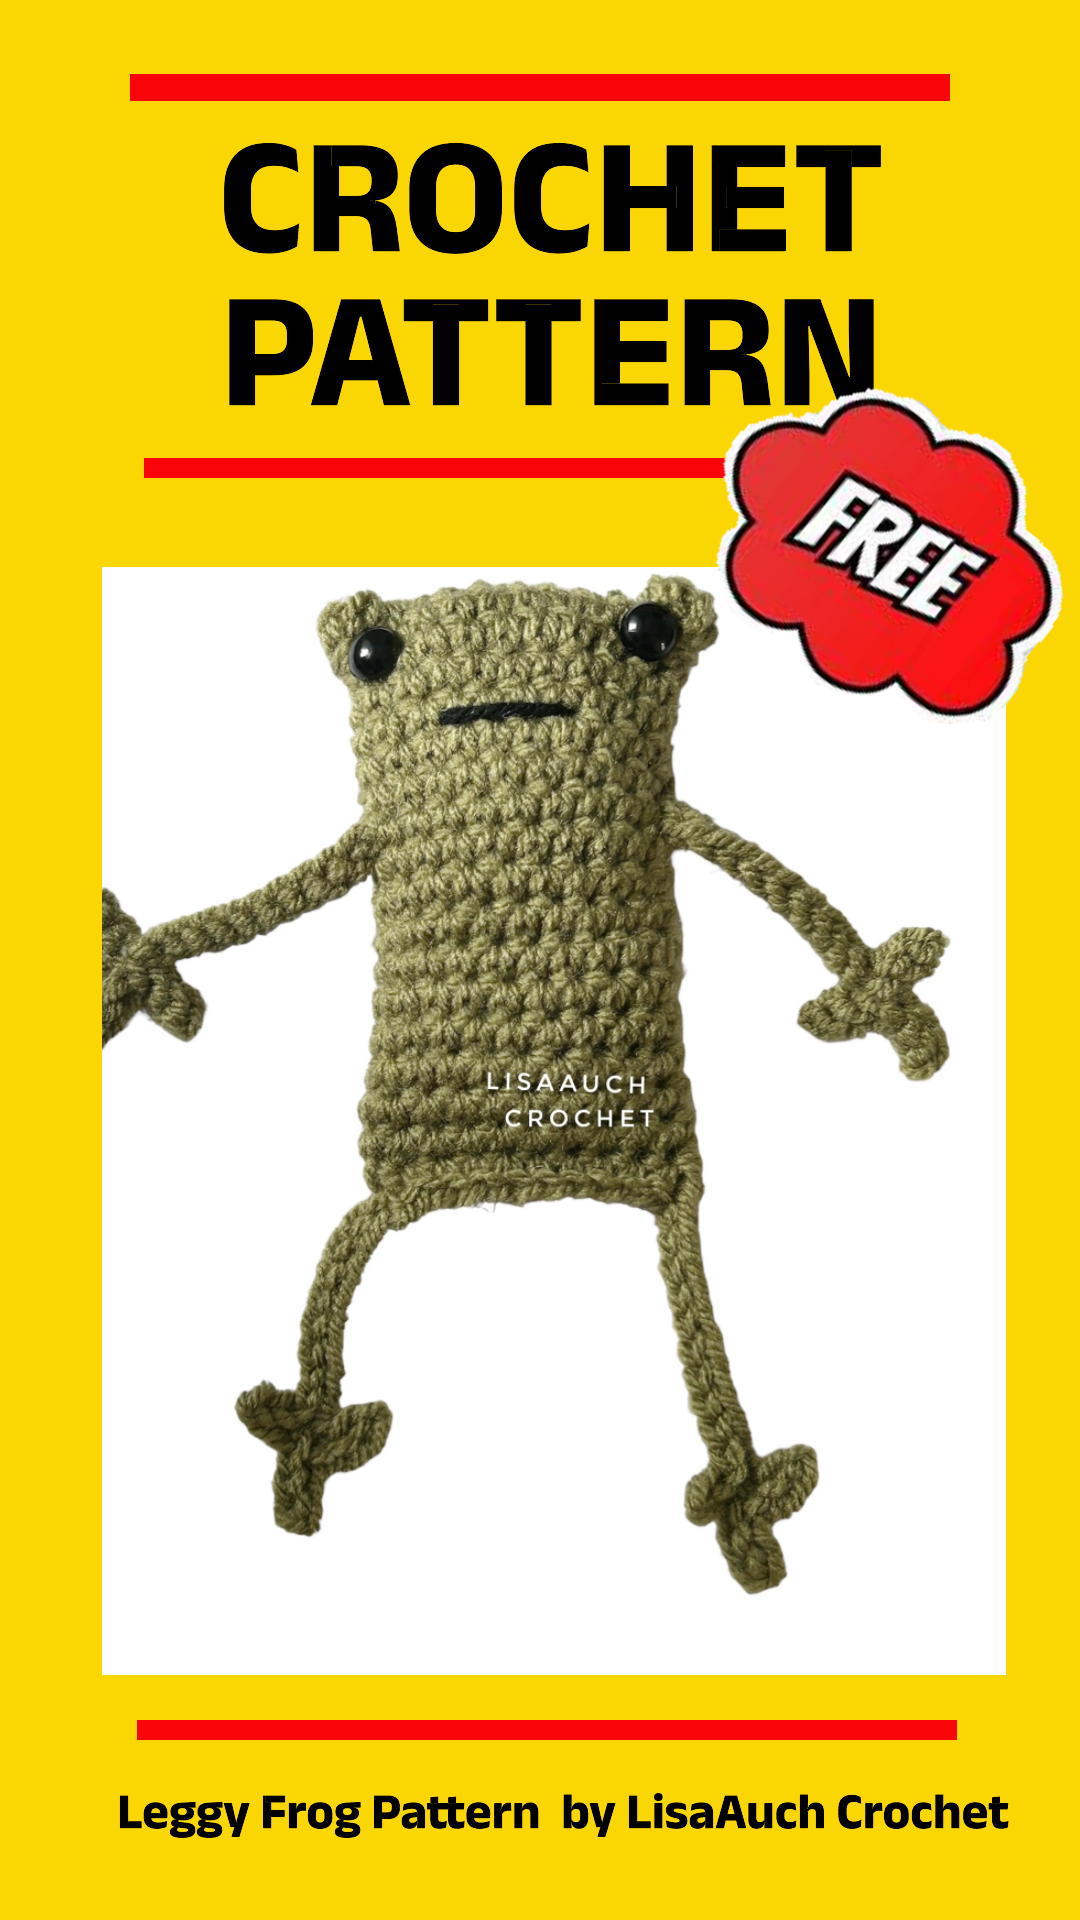 leggy frog crochet pattern free easy crochet frog pattern simple frog crochet pattern Leggy Frog Crochet Pattern FREE Tutorial Easy Crochet Projects